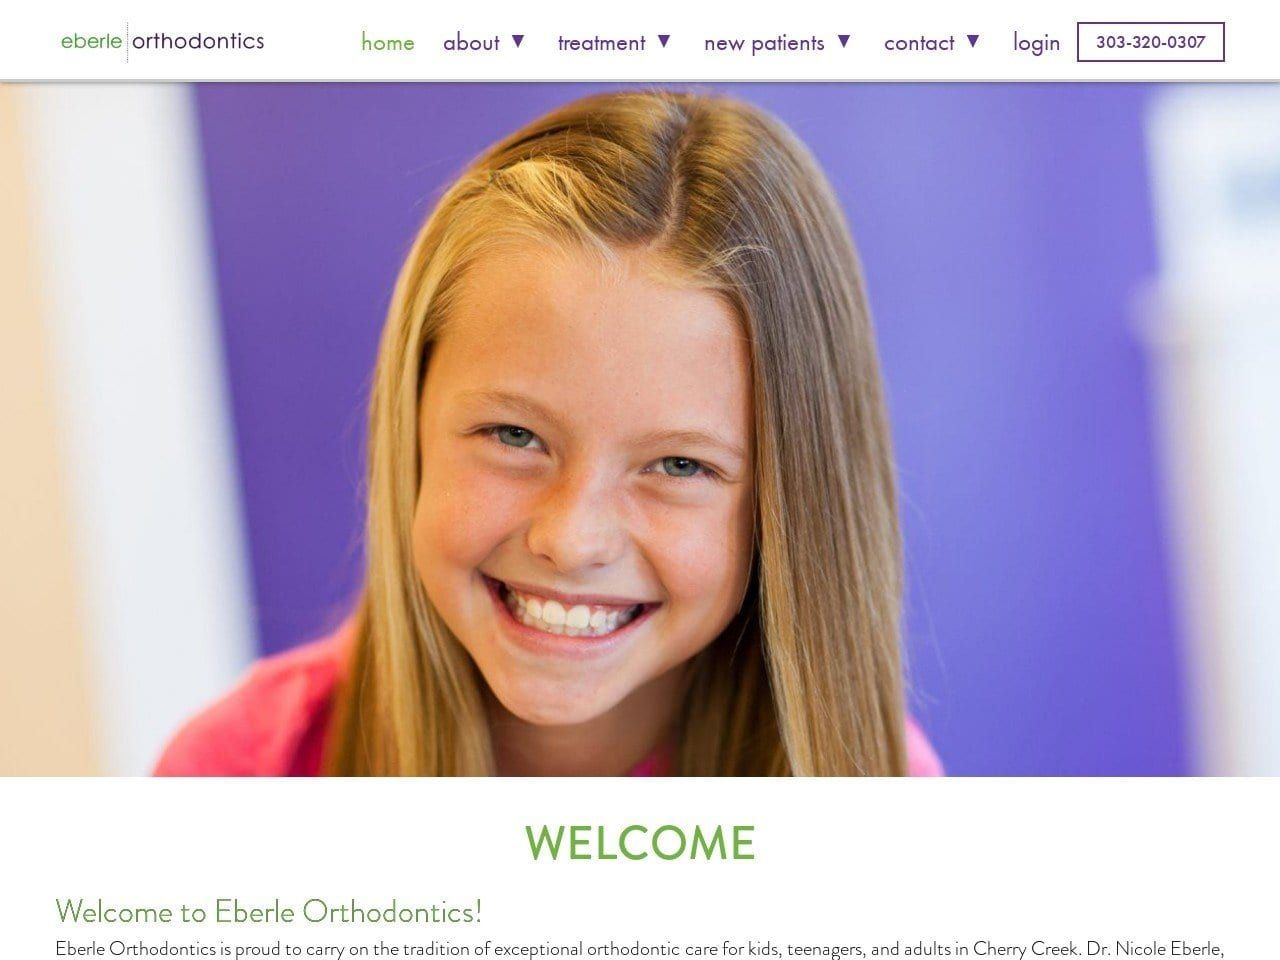 Eberle Orthodontics Website Screenshot from smilesbyeberle.com